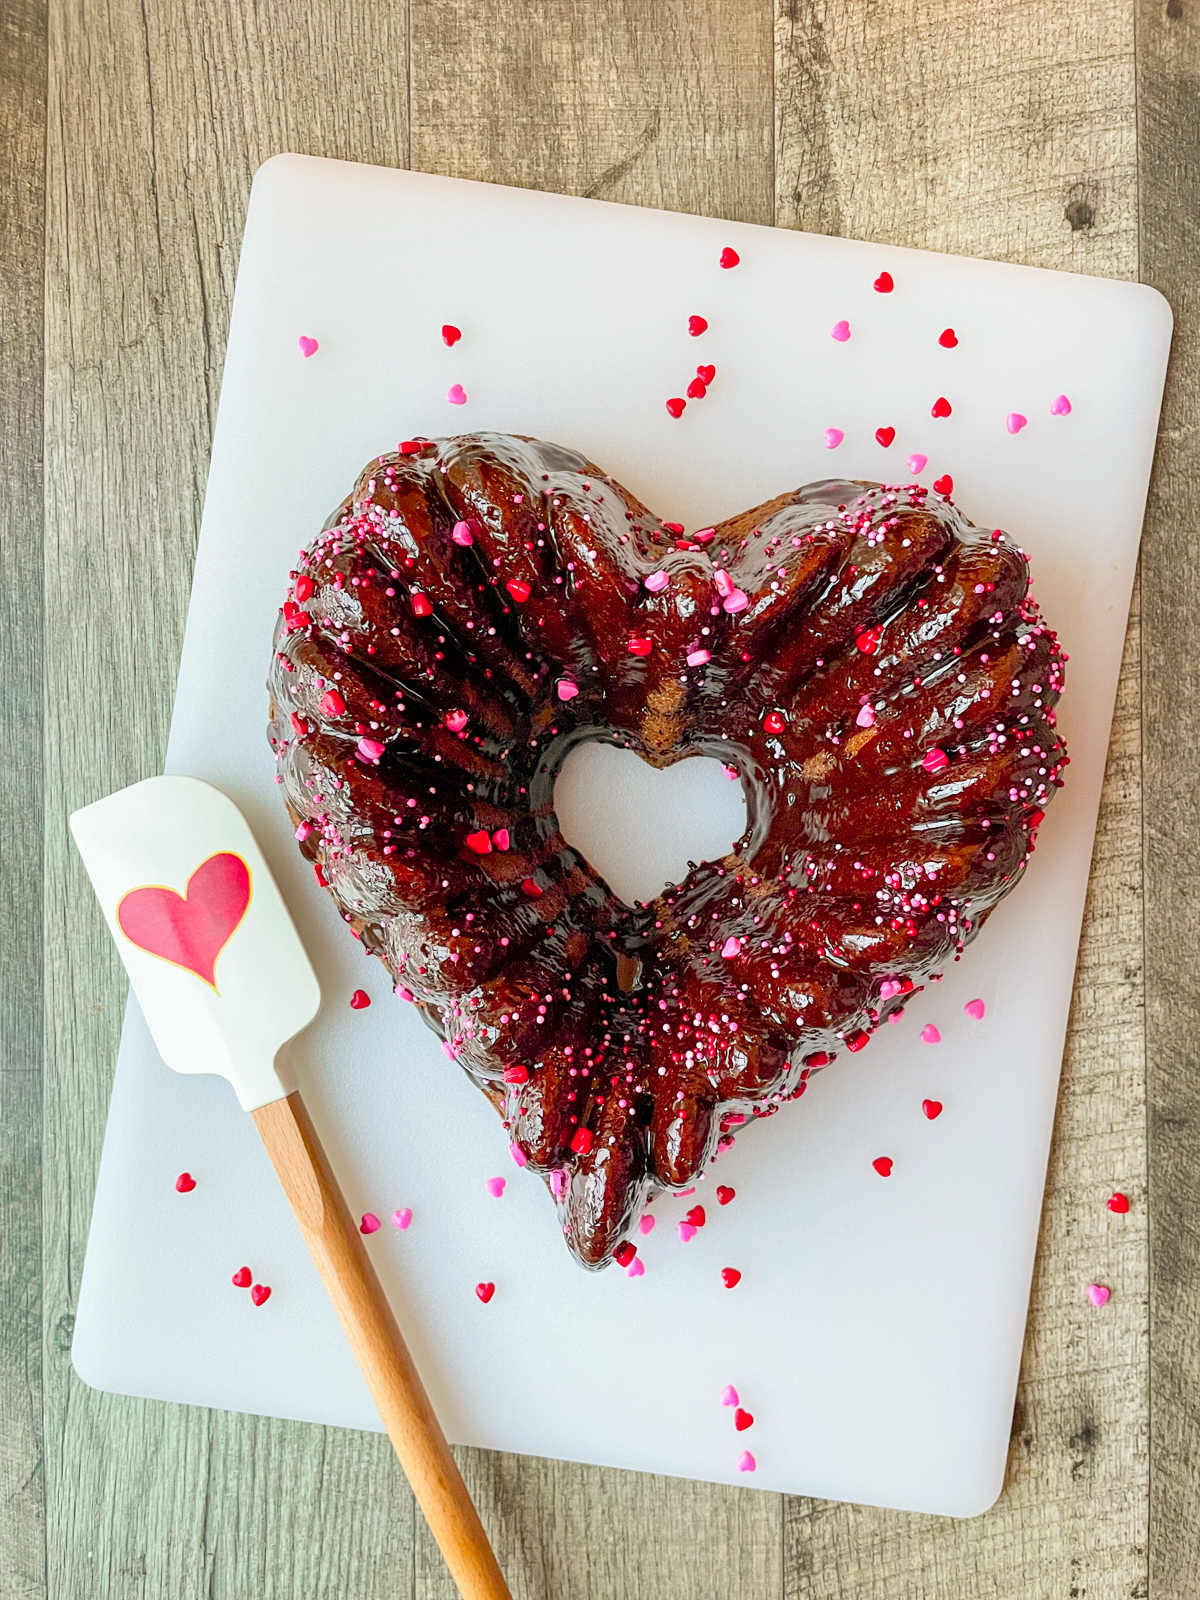 https://everydaylaura.com/wp-content/uploads/2022/01/Triple-Chocolate-Valentine-Bundt-Cake-5-of-7.jpg